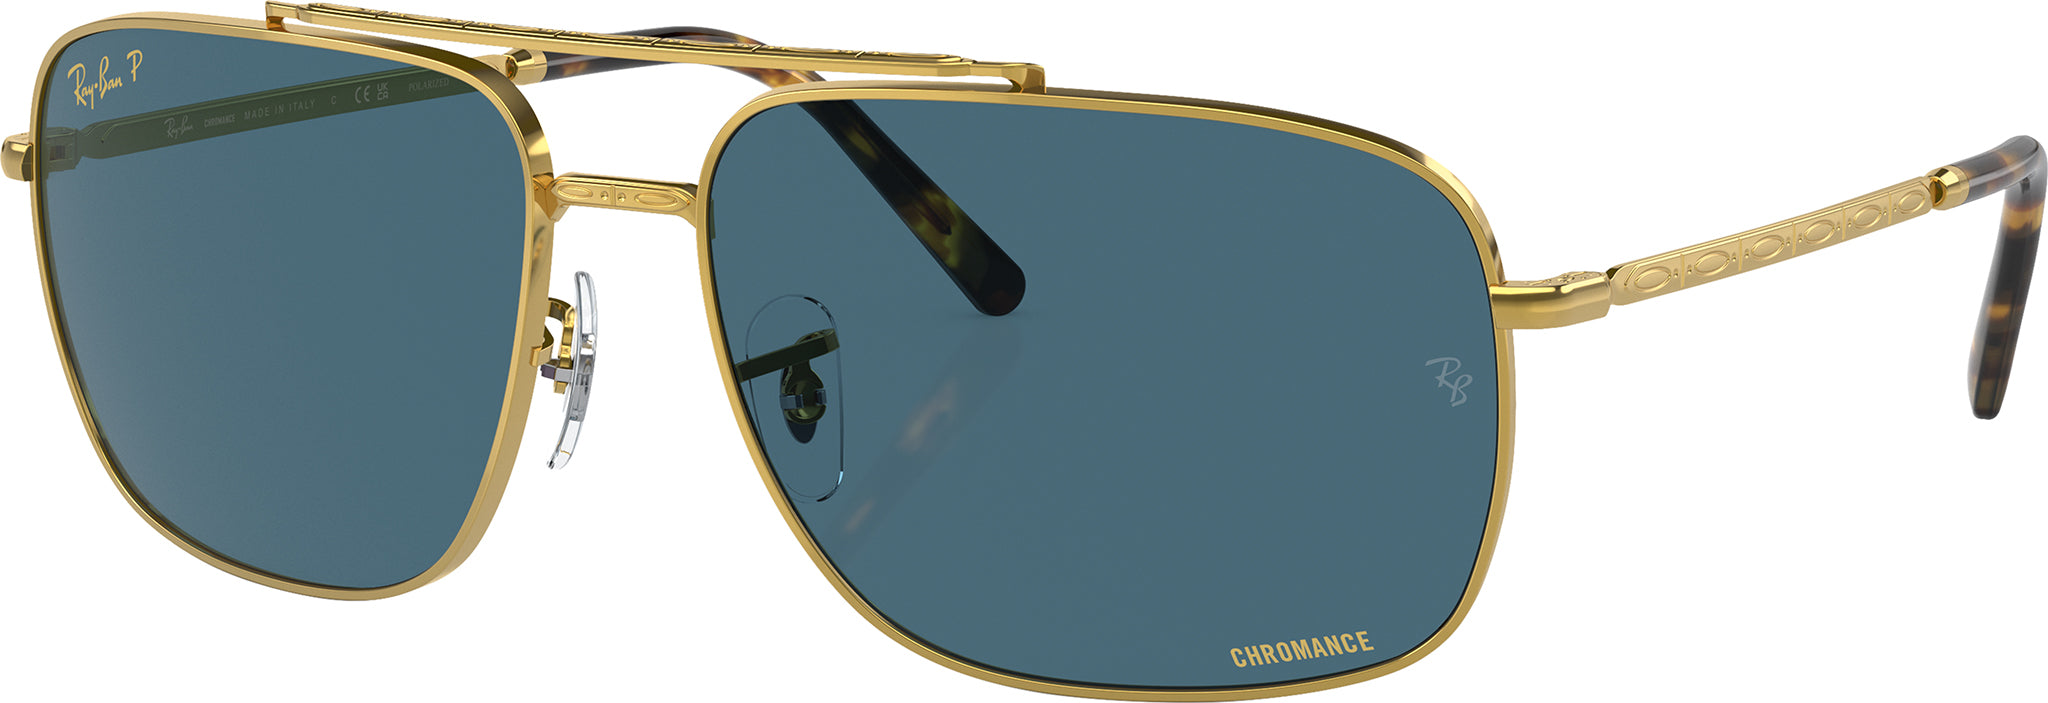 Ray-Ban RB3796 59 Dark Green & Gold Polarized Sunglasses